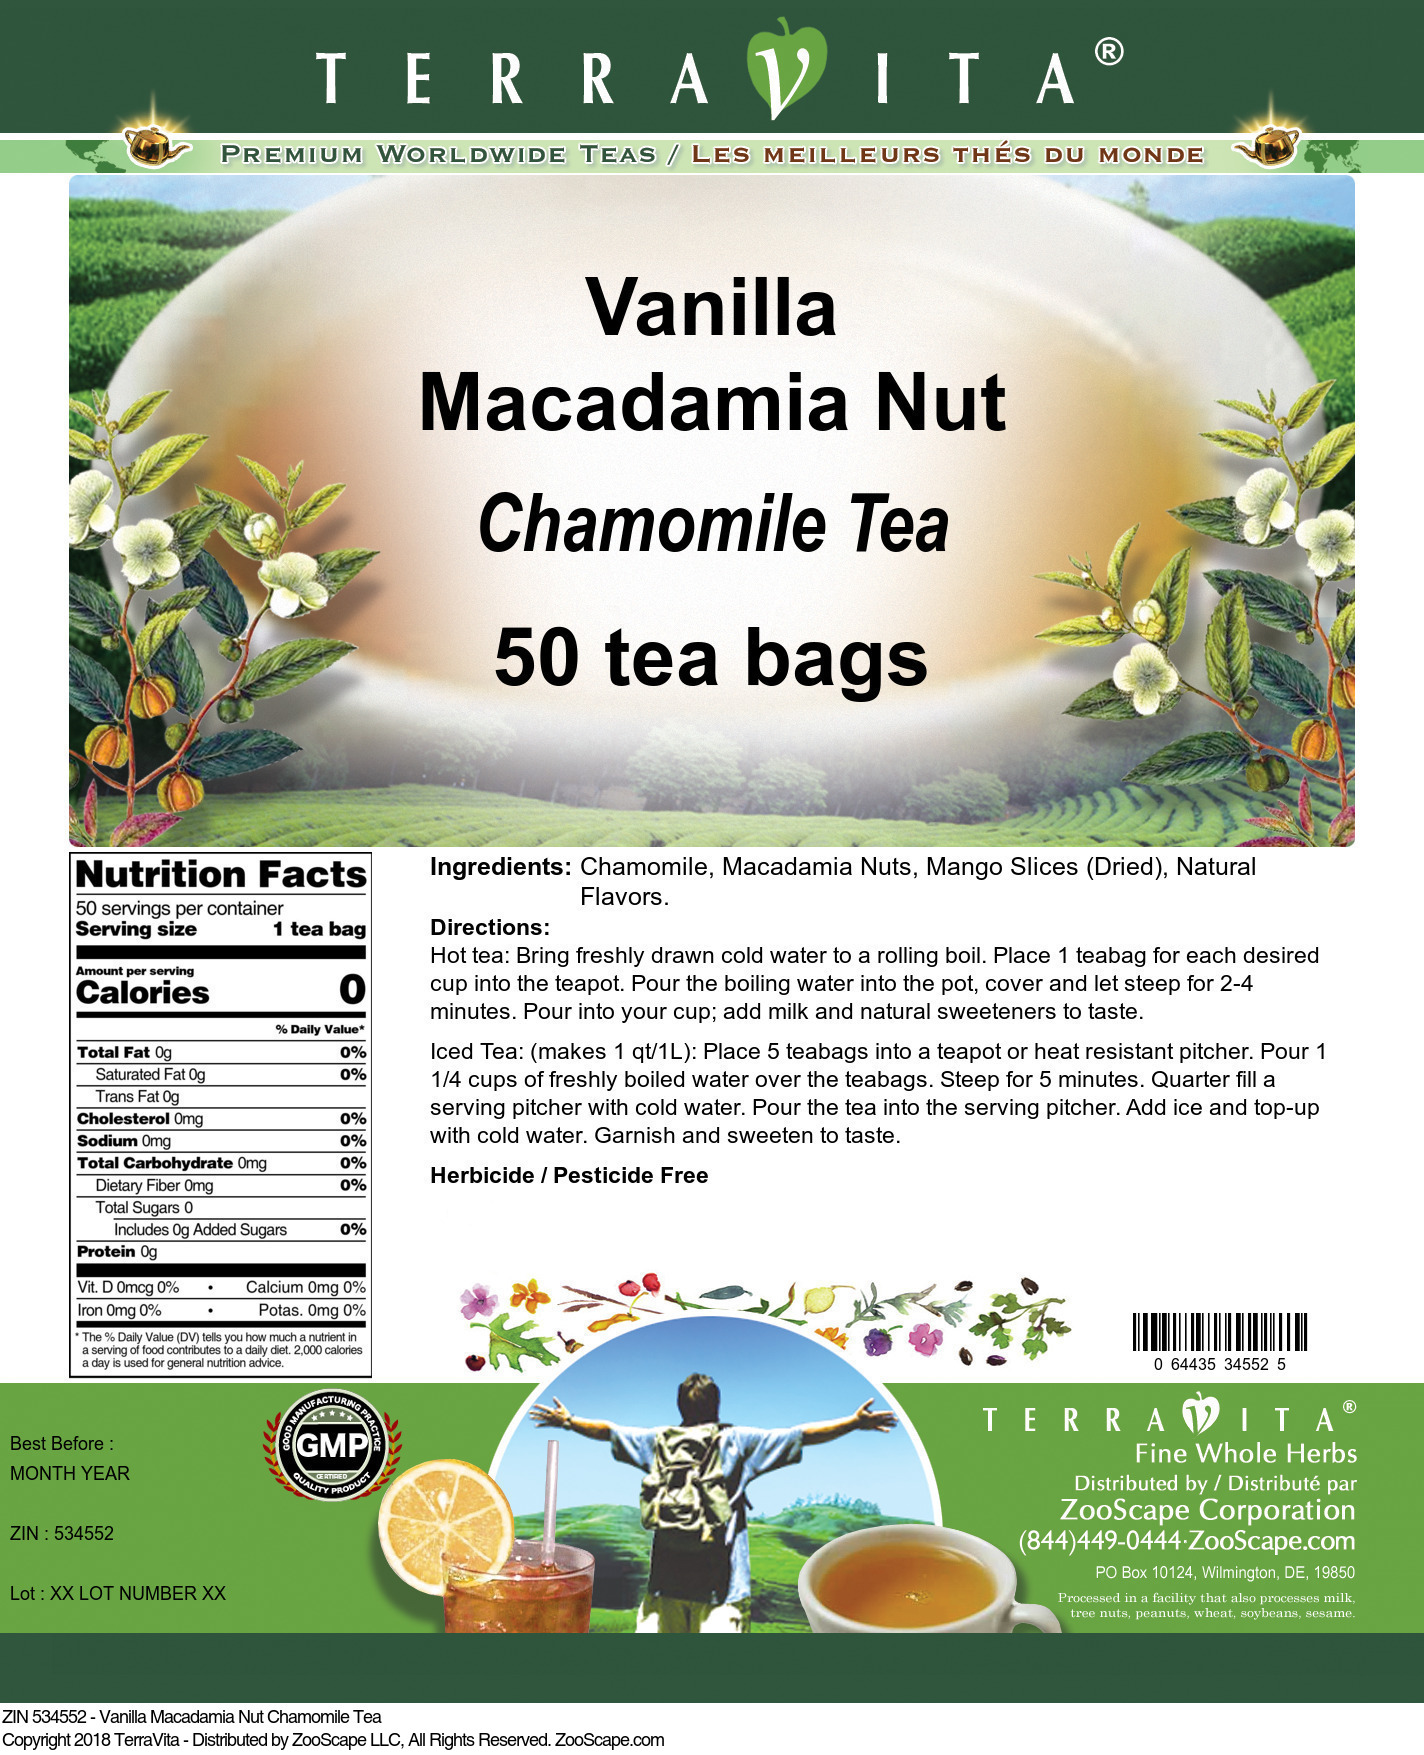 Vanilla Macadamia Nut Chamomile Tea - Label